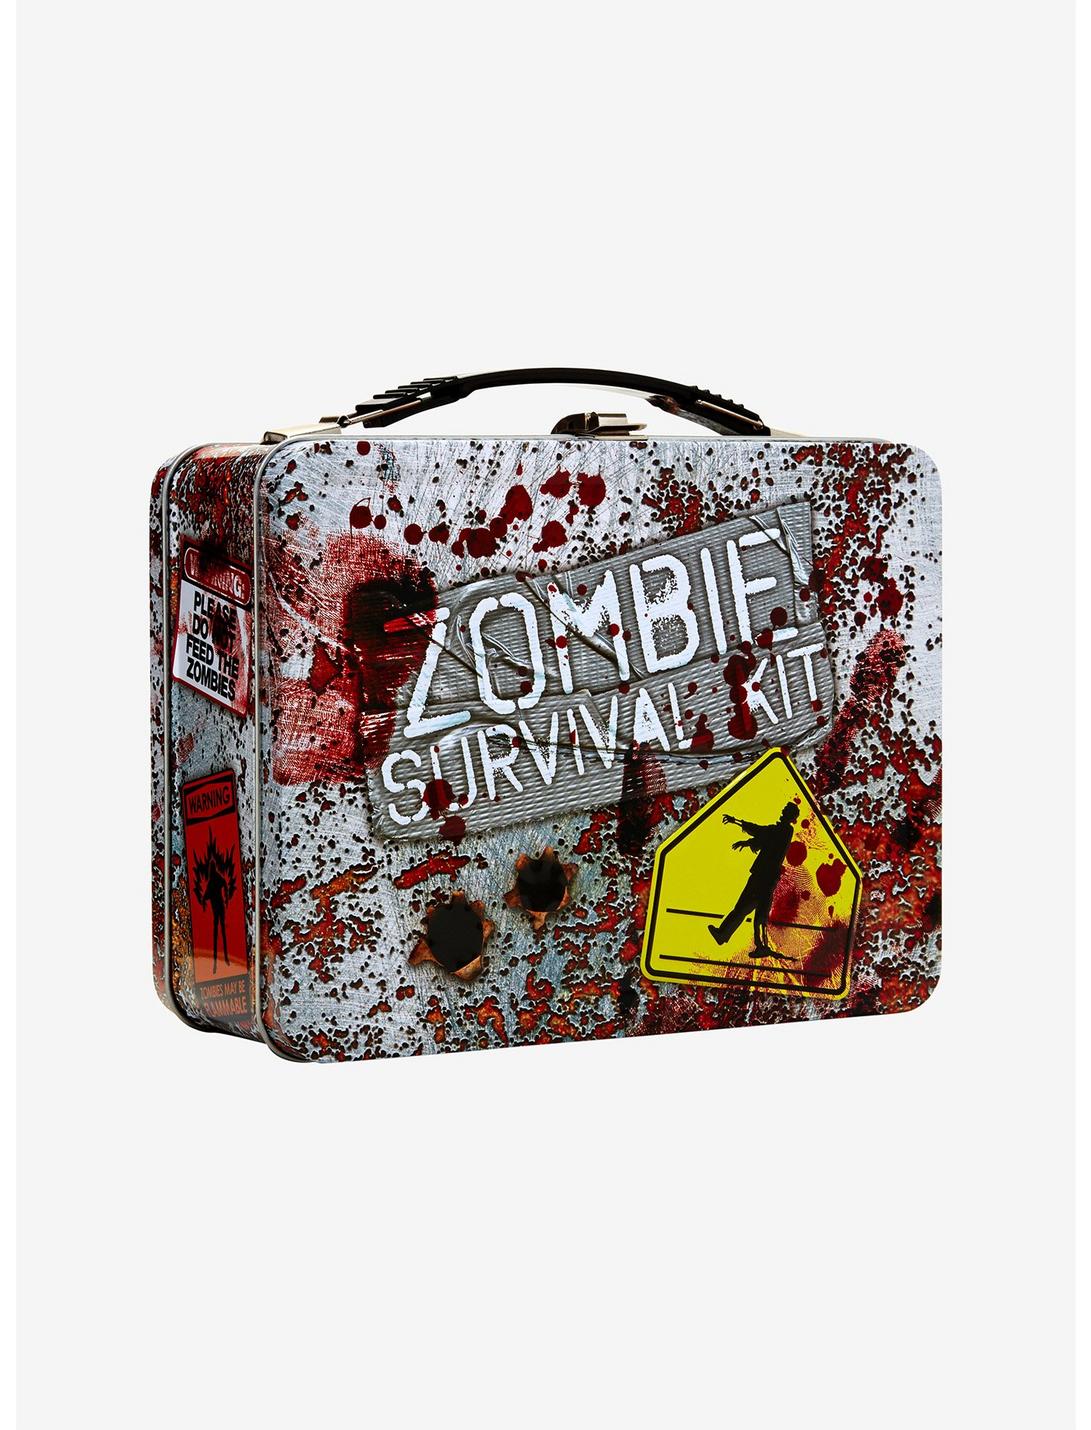 Zombie Survival Kit Metal Lunch Box, , hi-res